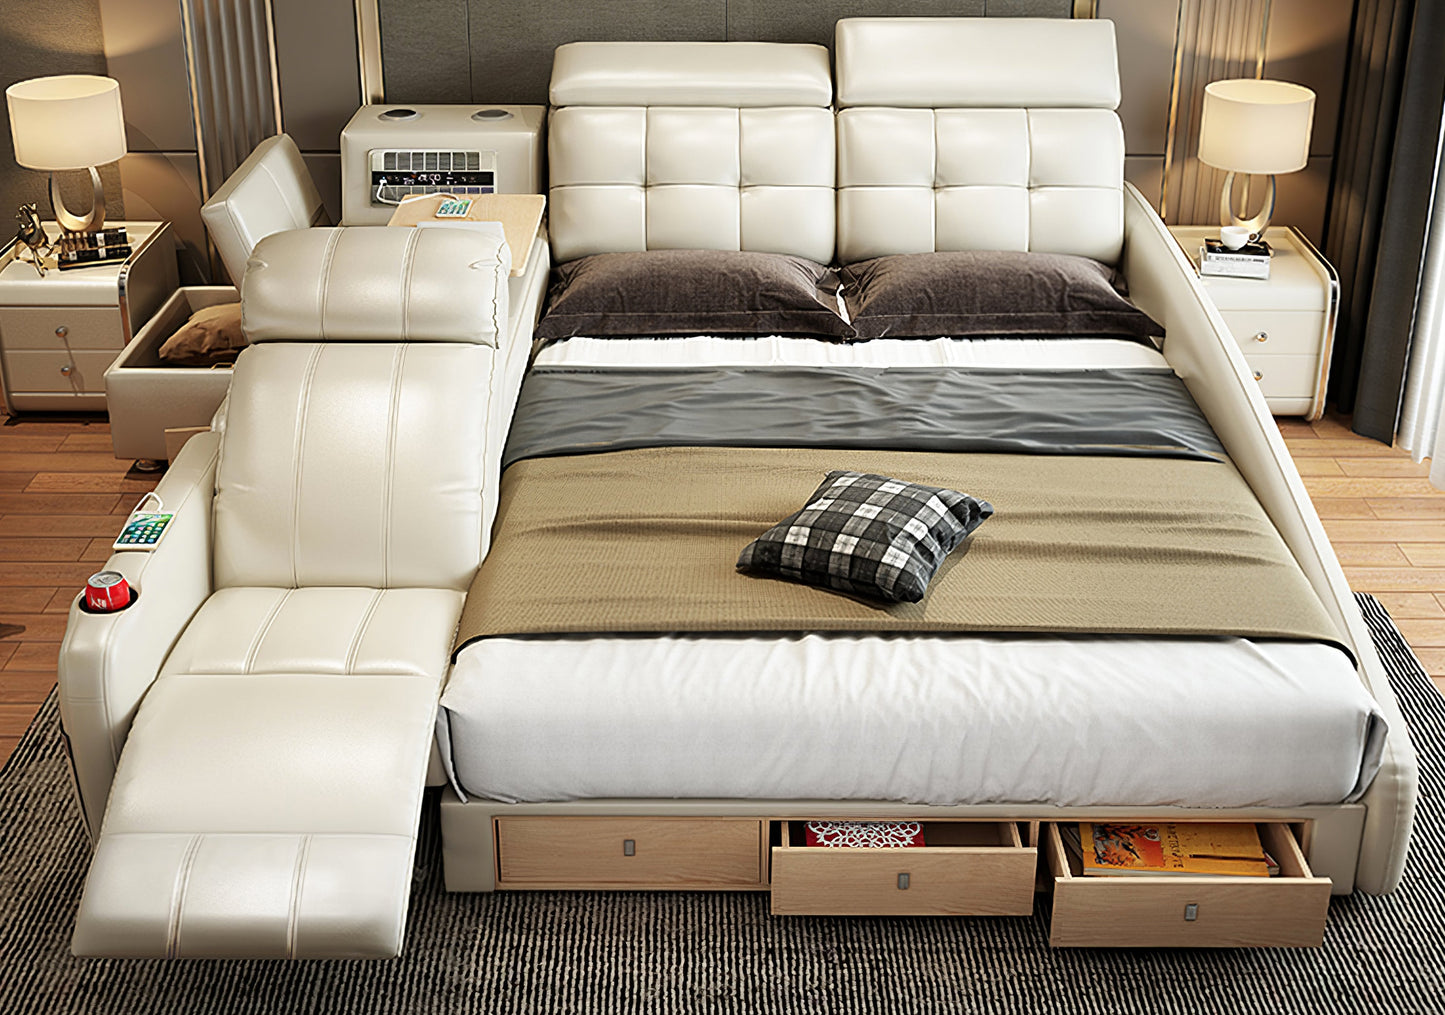 Multifunctional Smart Bed | Futuristic Furniture